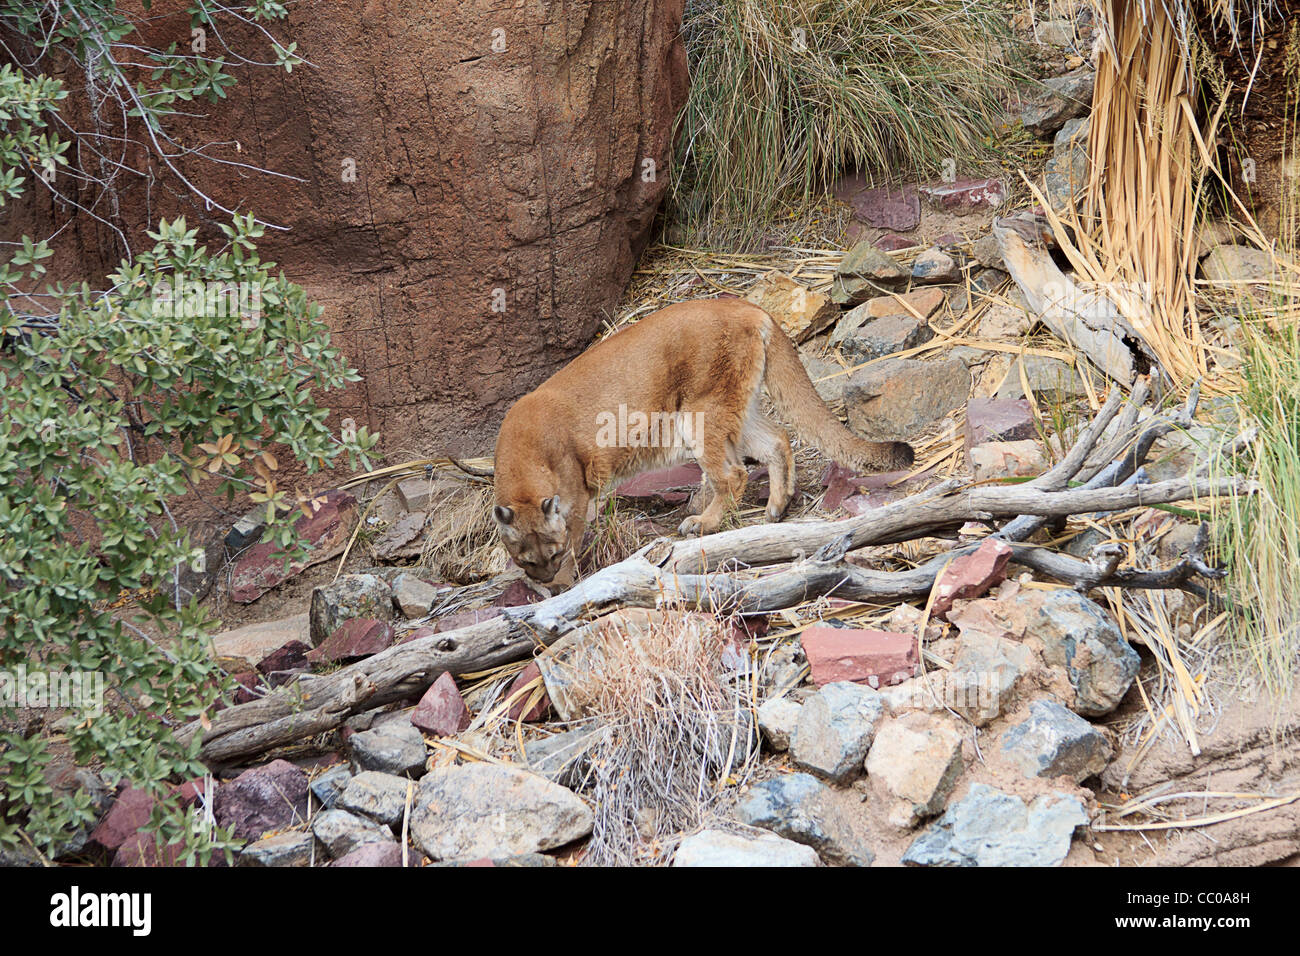 Mountain lion, also known as puma or cougar, (Puma concolor) in Arizona-Sonora Desert museum outside Tucson, AZ. Stock Photo